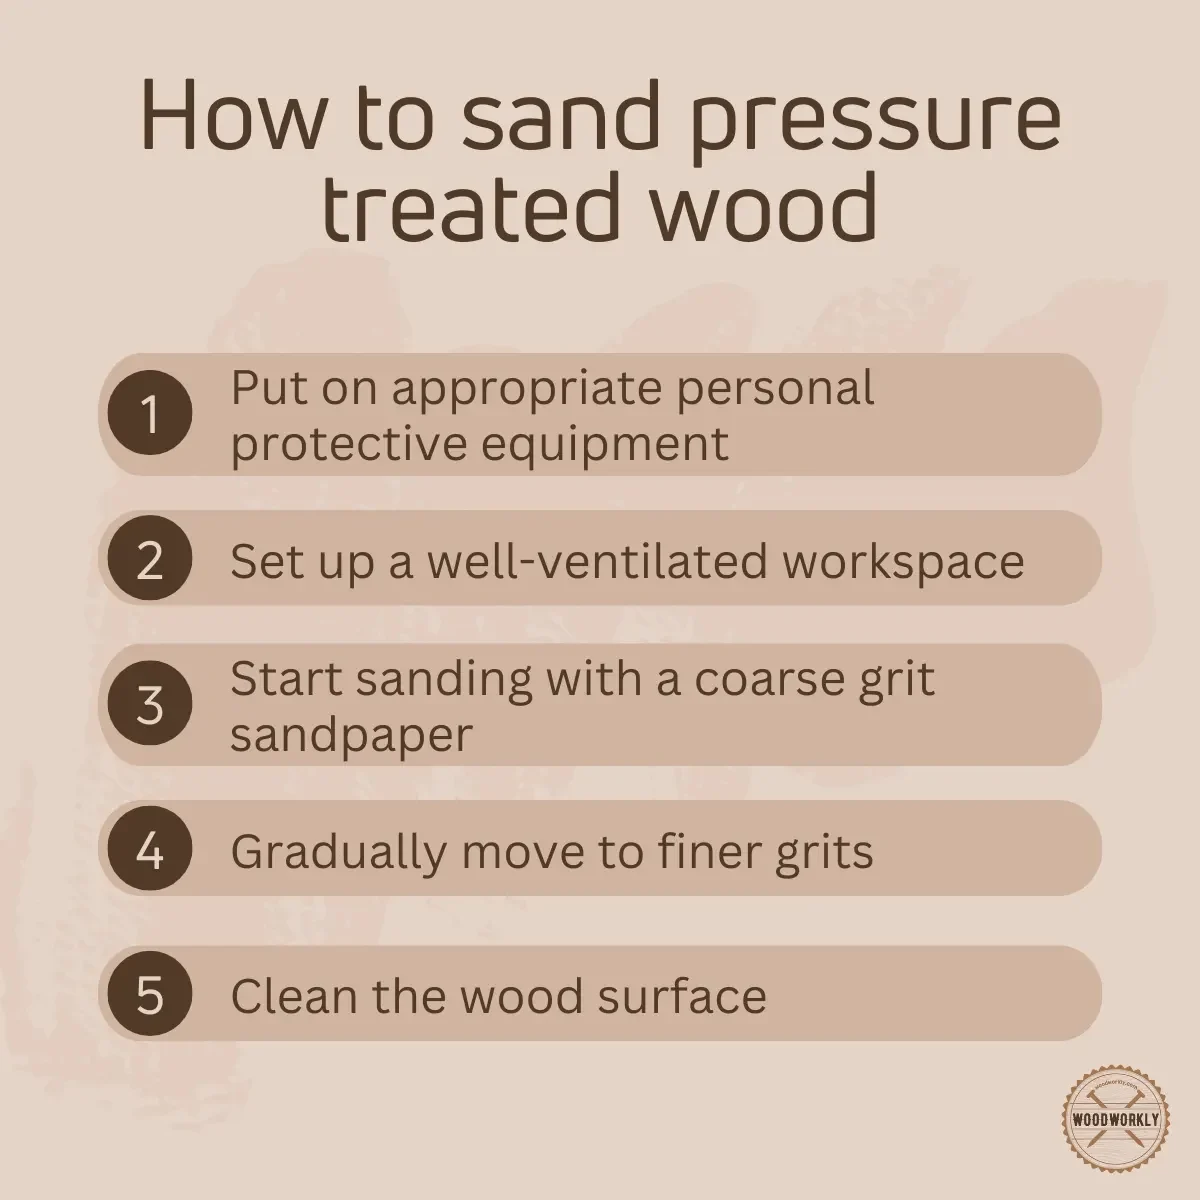 How to sand pressure treated wood